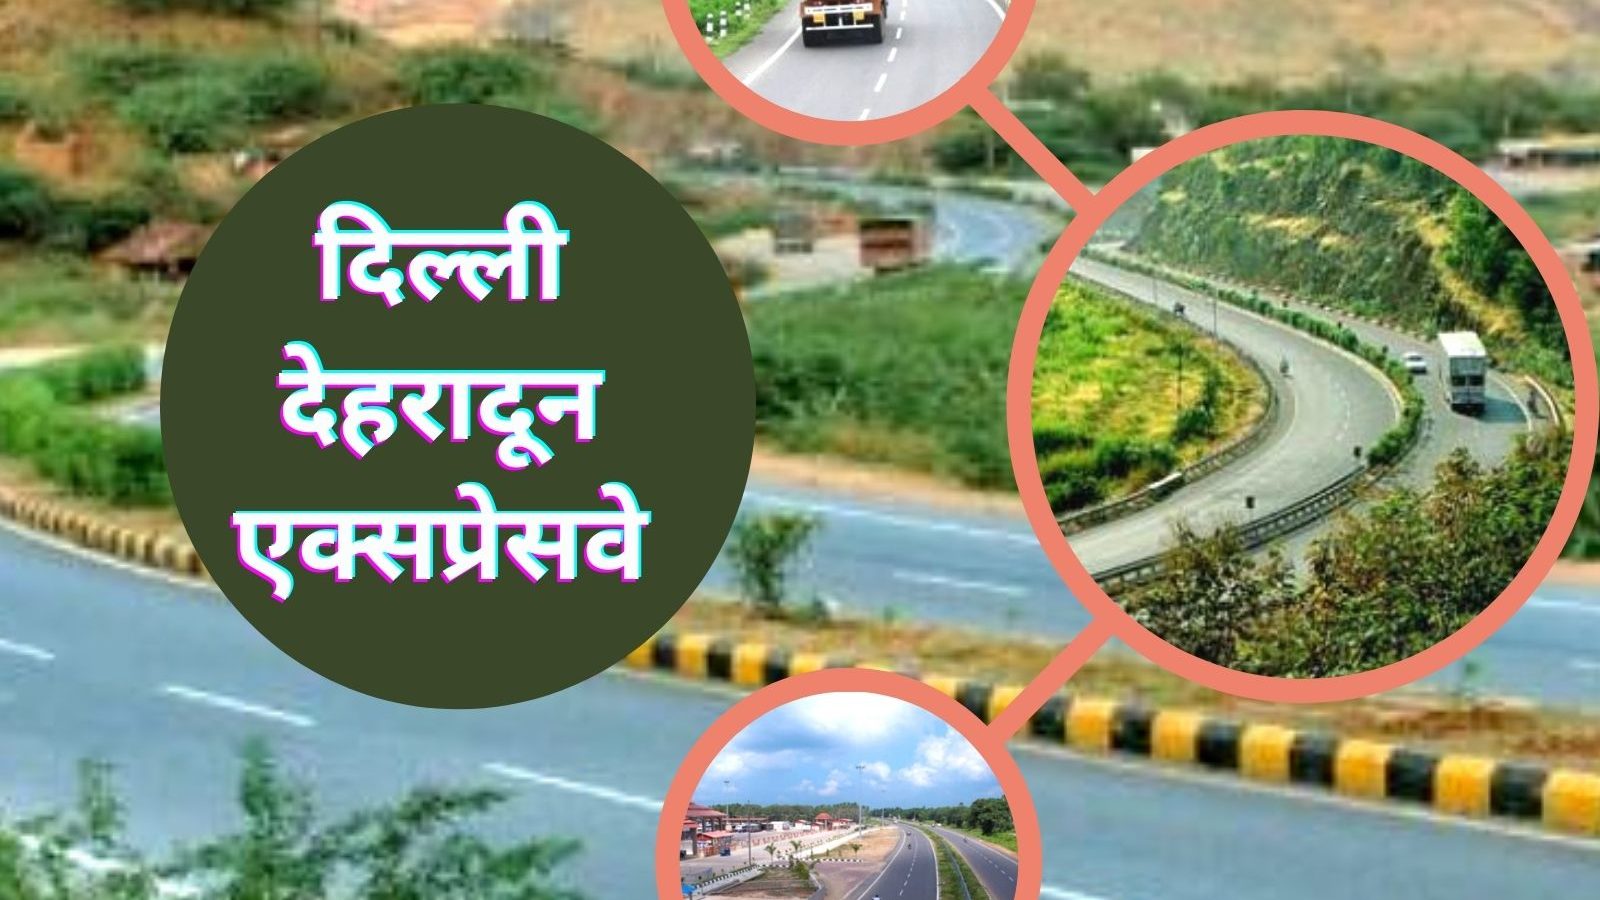 Moti Nagar leg of elevated road in West Delhi opened | Latest News Delhi -  Hindustan Times